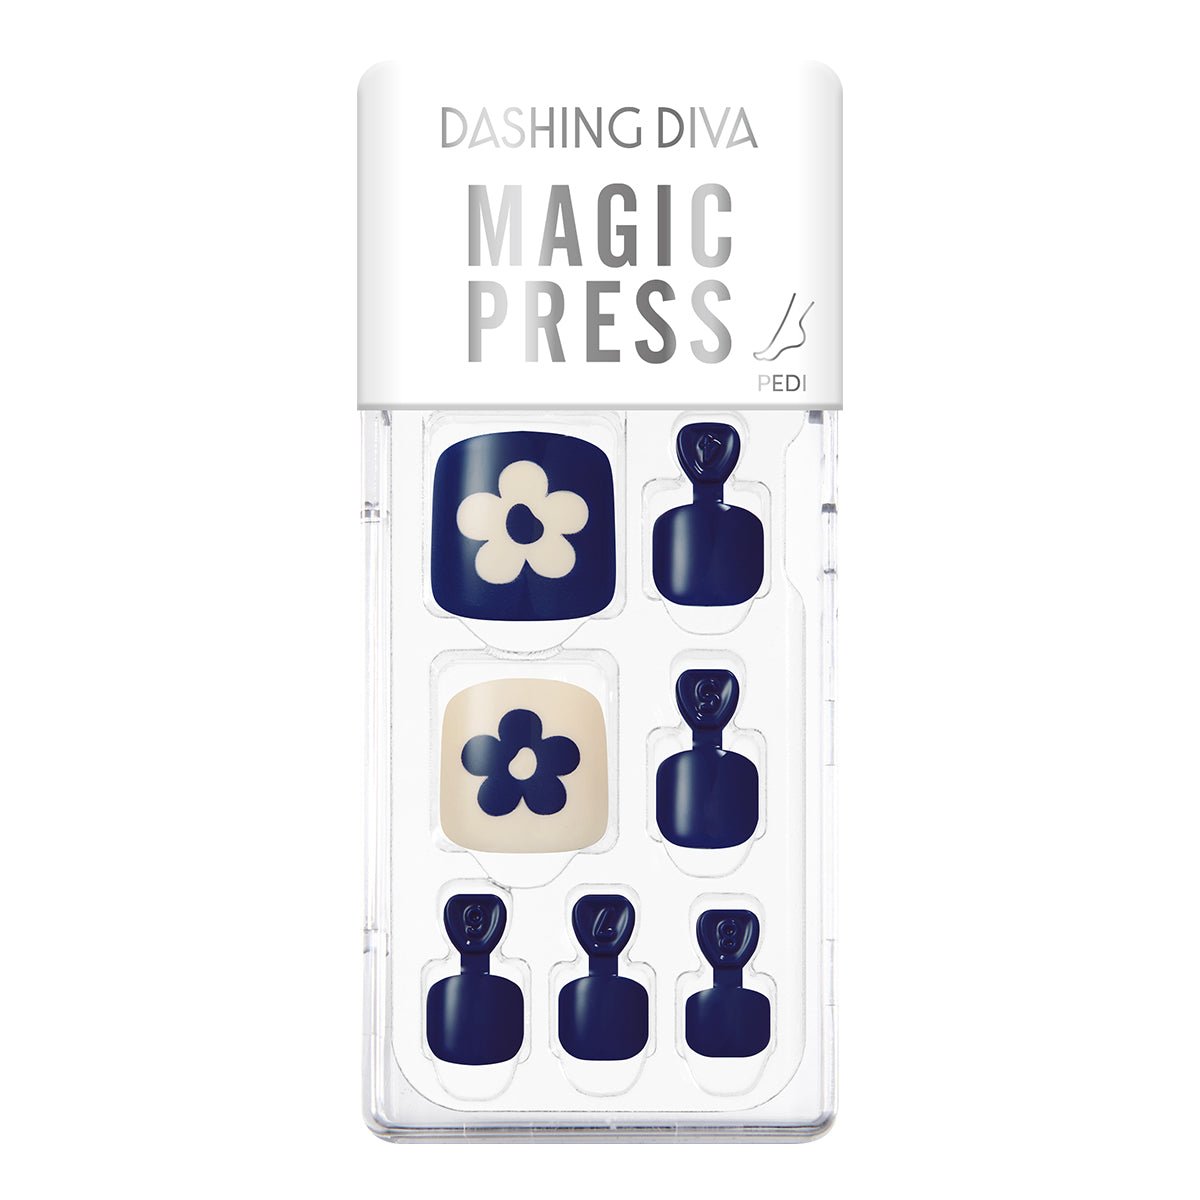 Decalcomanie - Magic Press Art - Pedicure - Dashing Diva Singapore